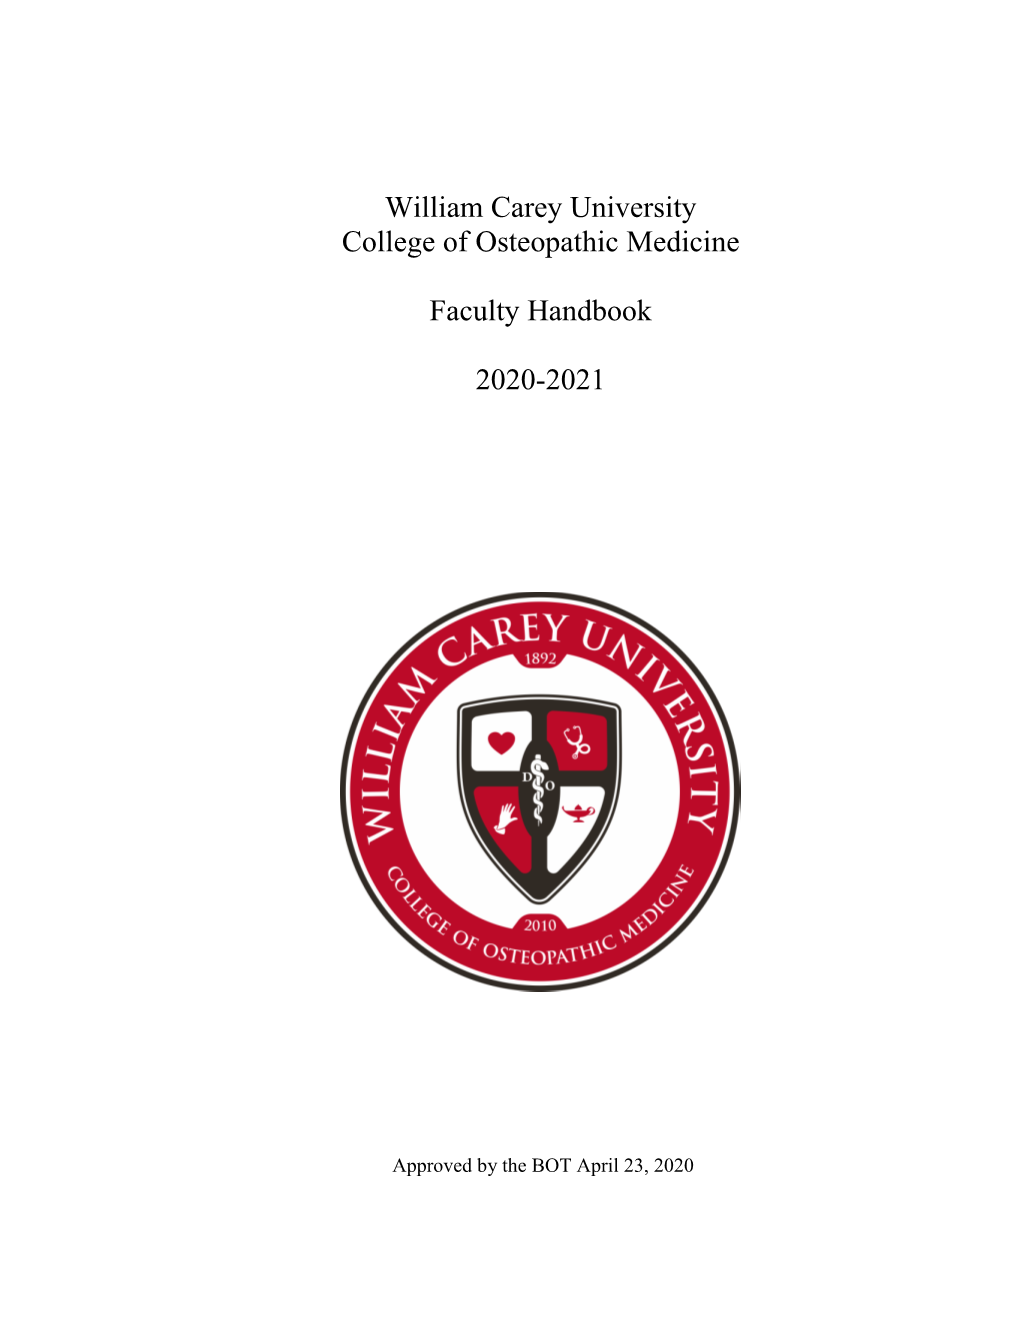 William Carey University College of Osteopathic Medicine Faculty Handbook 2020-2021